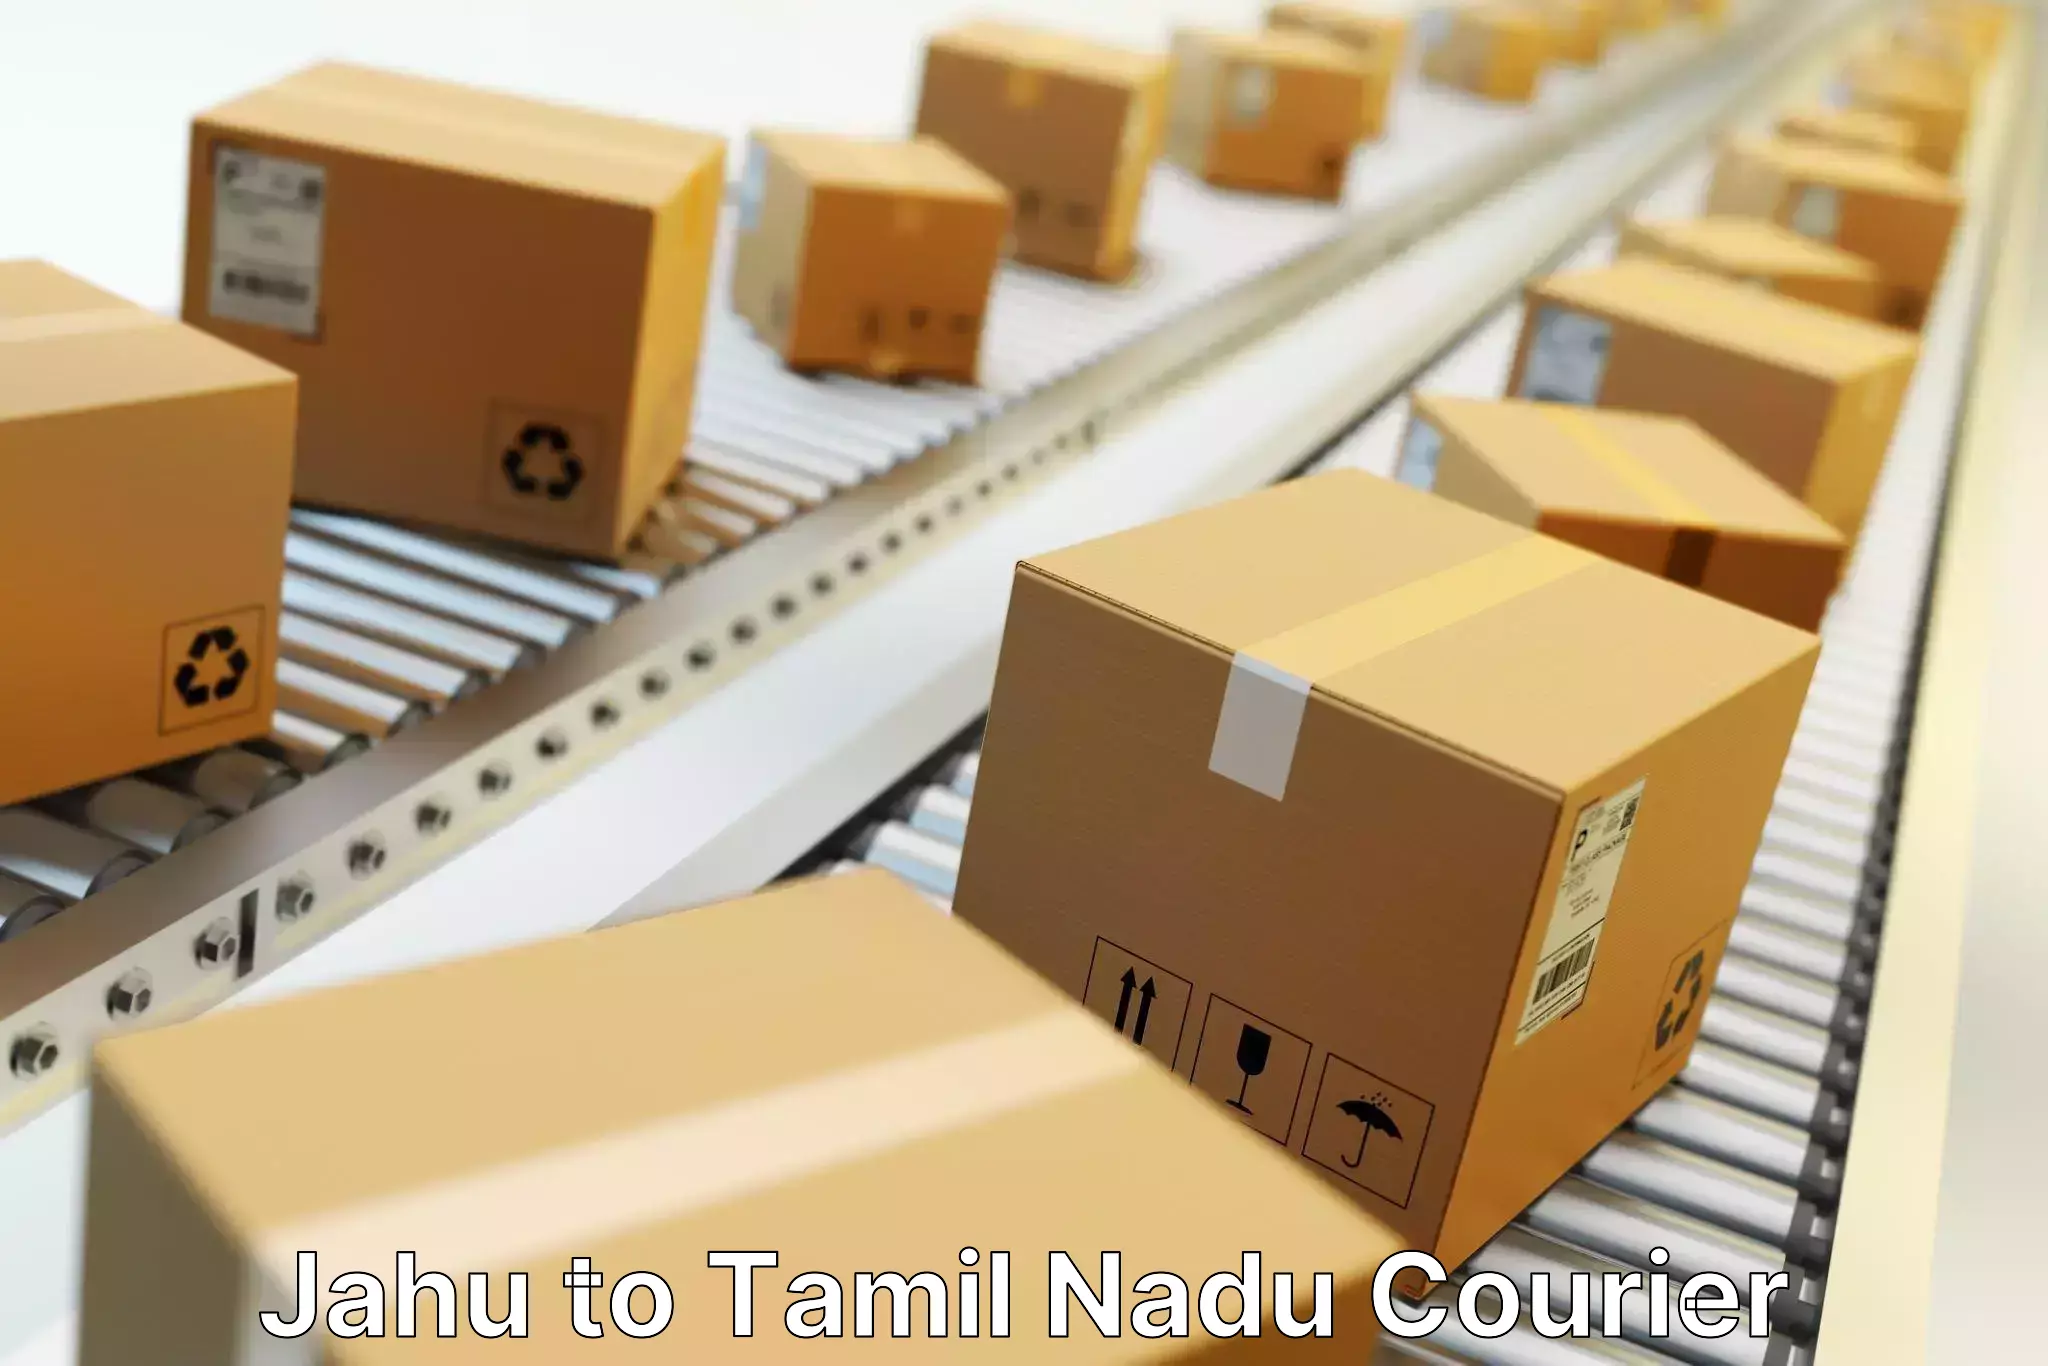 Global courier networks Jahu to Tamil Nadu